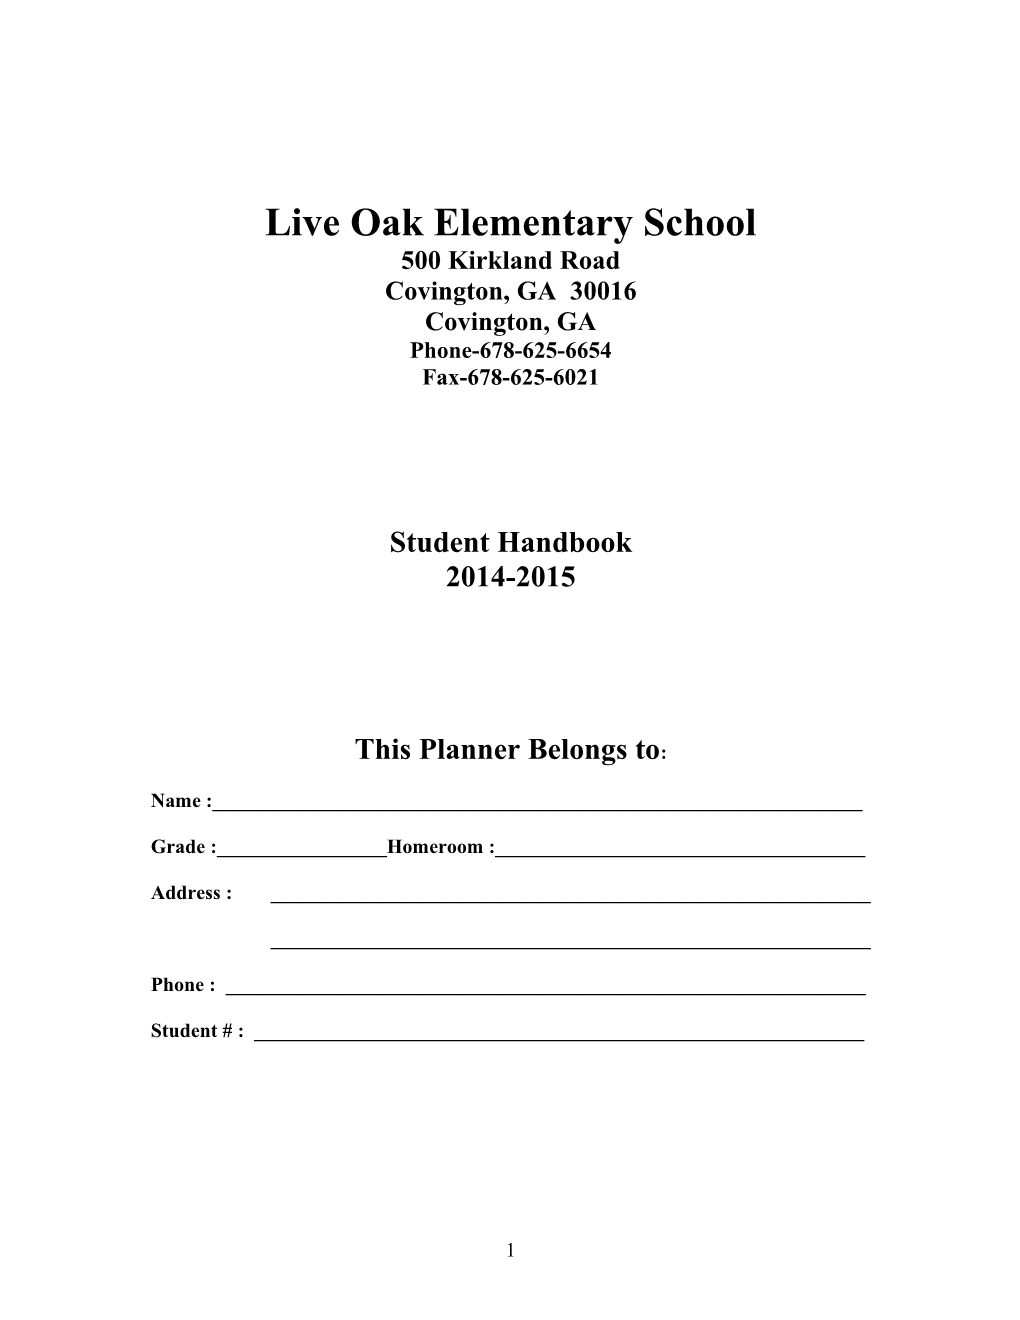 Live Oak SY13-14 Handbook